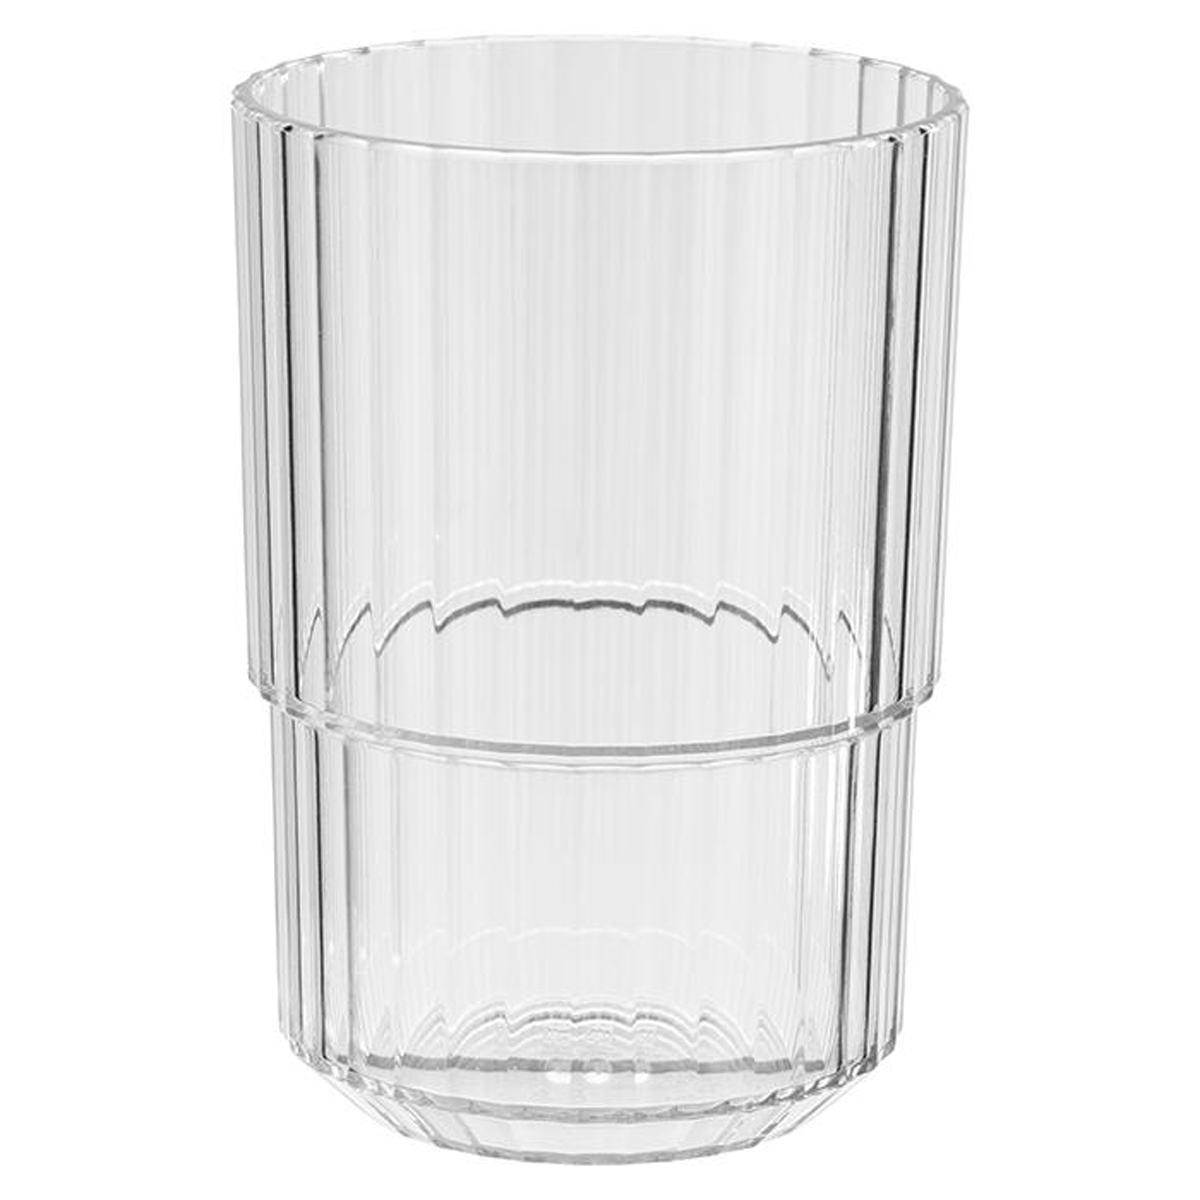 Becher Plastik Trinkglas Transparent ml 400 6 Stück kaufen